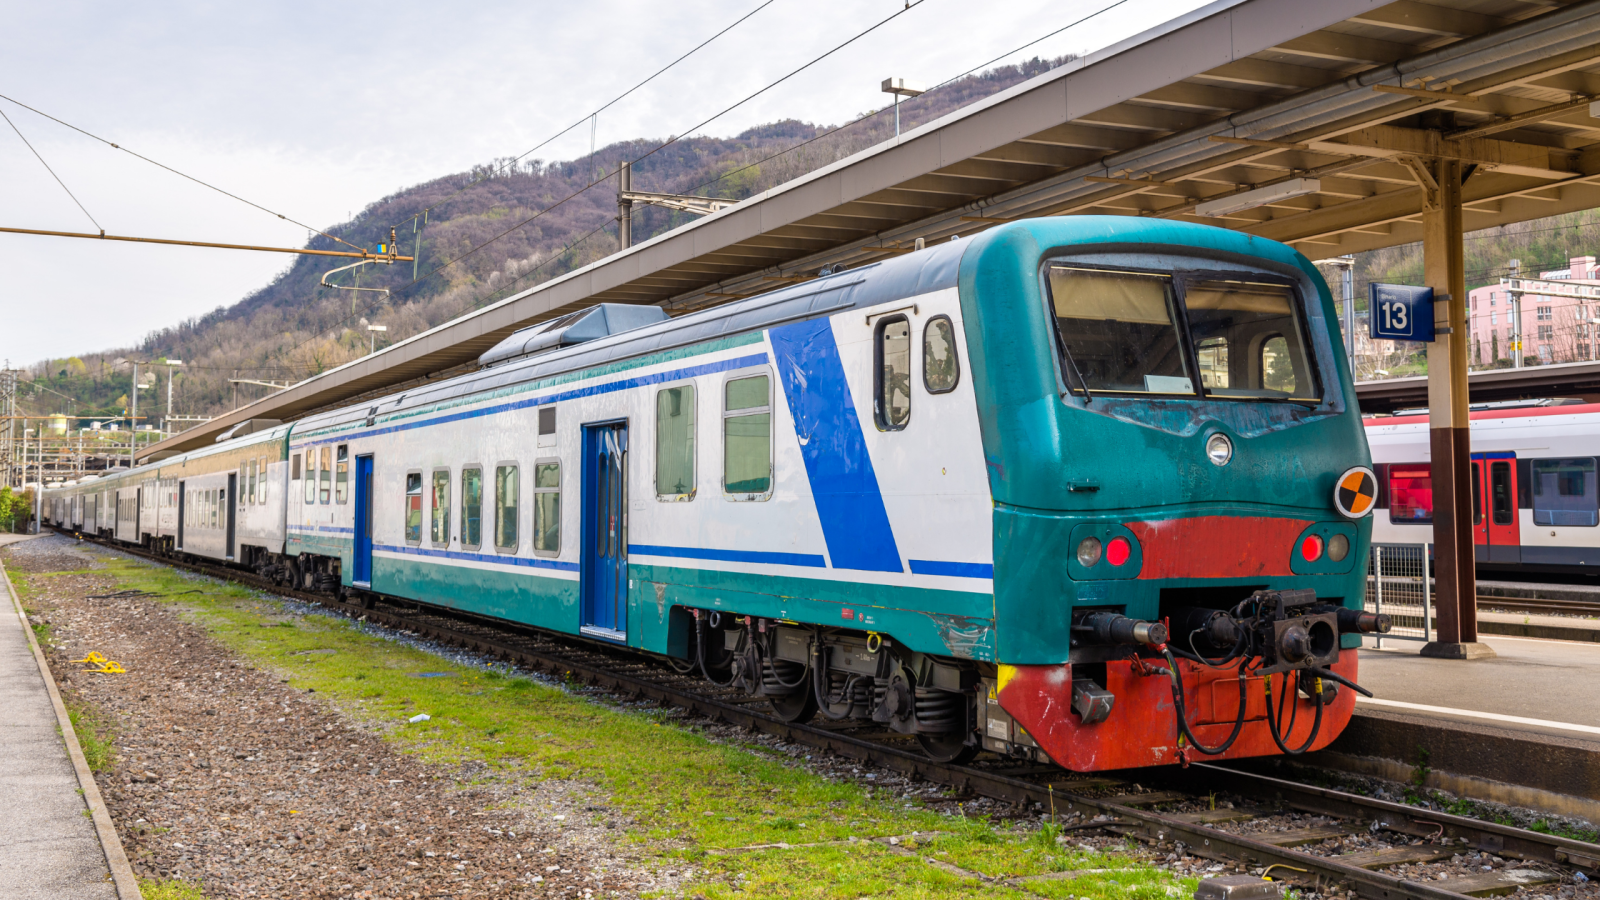 An Italian regional passenger train at a Swiss border station in Chiasso, Switzerland.